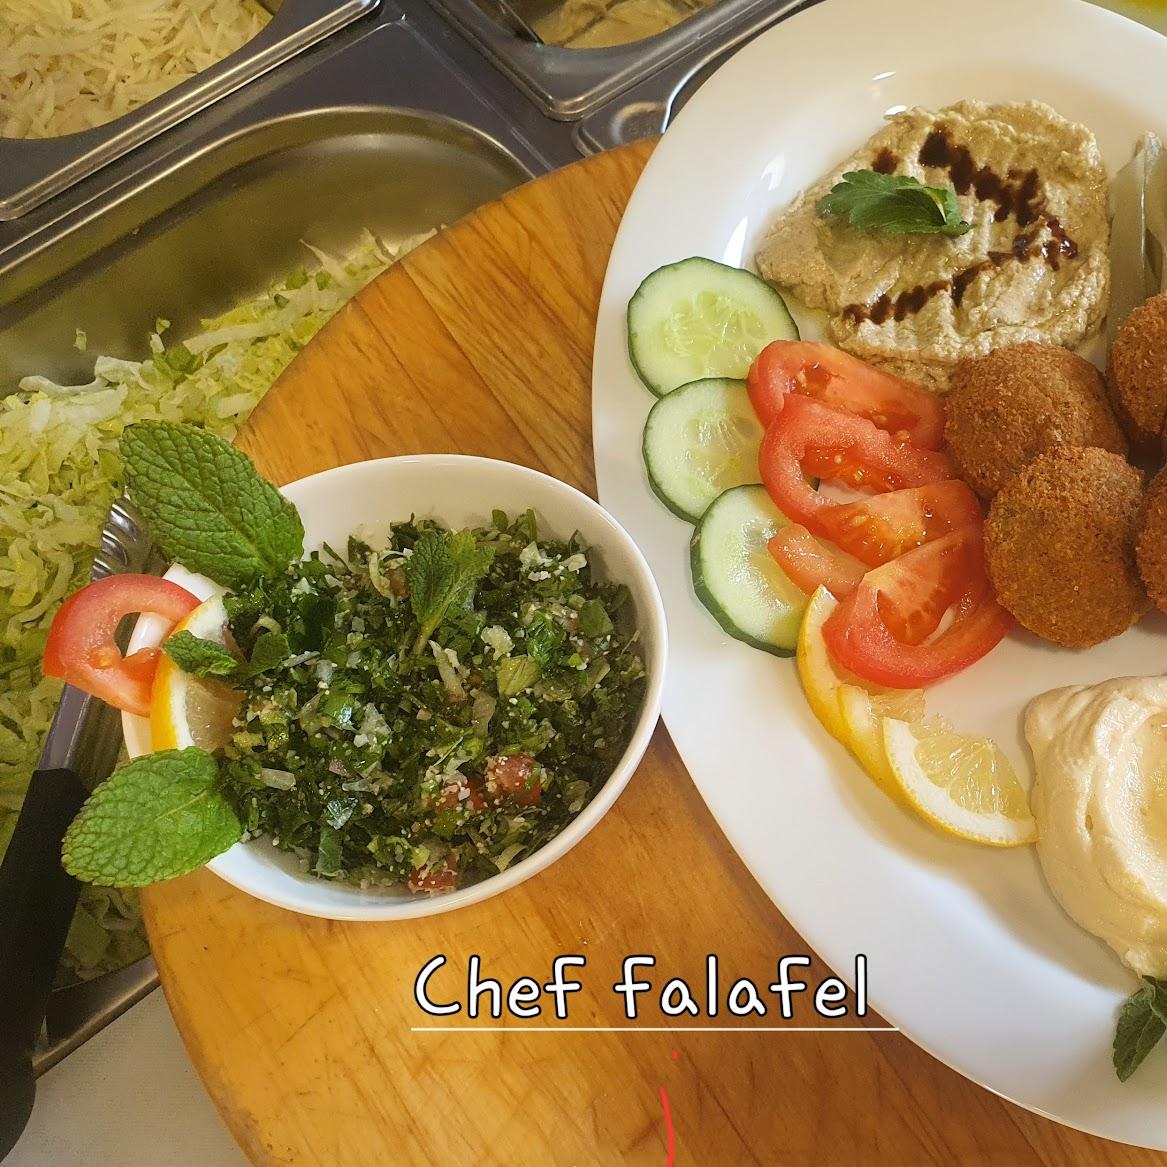 Restaurant "Chef Falafel" in Oberndorf am Neckar